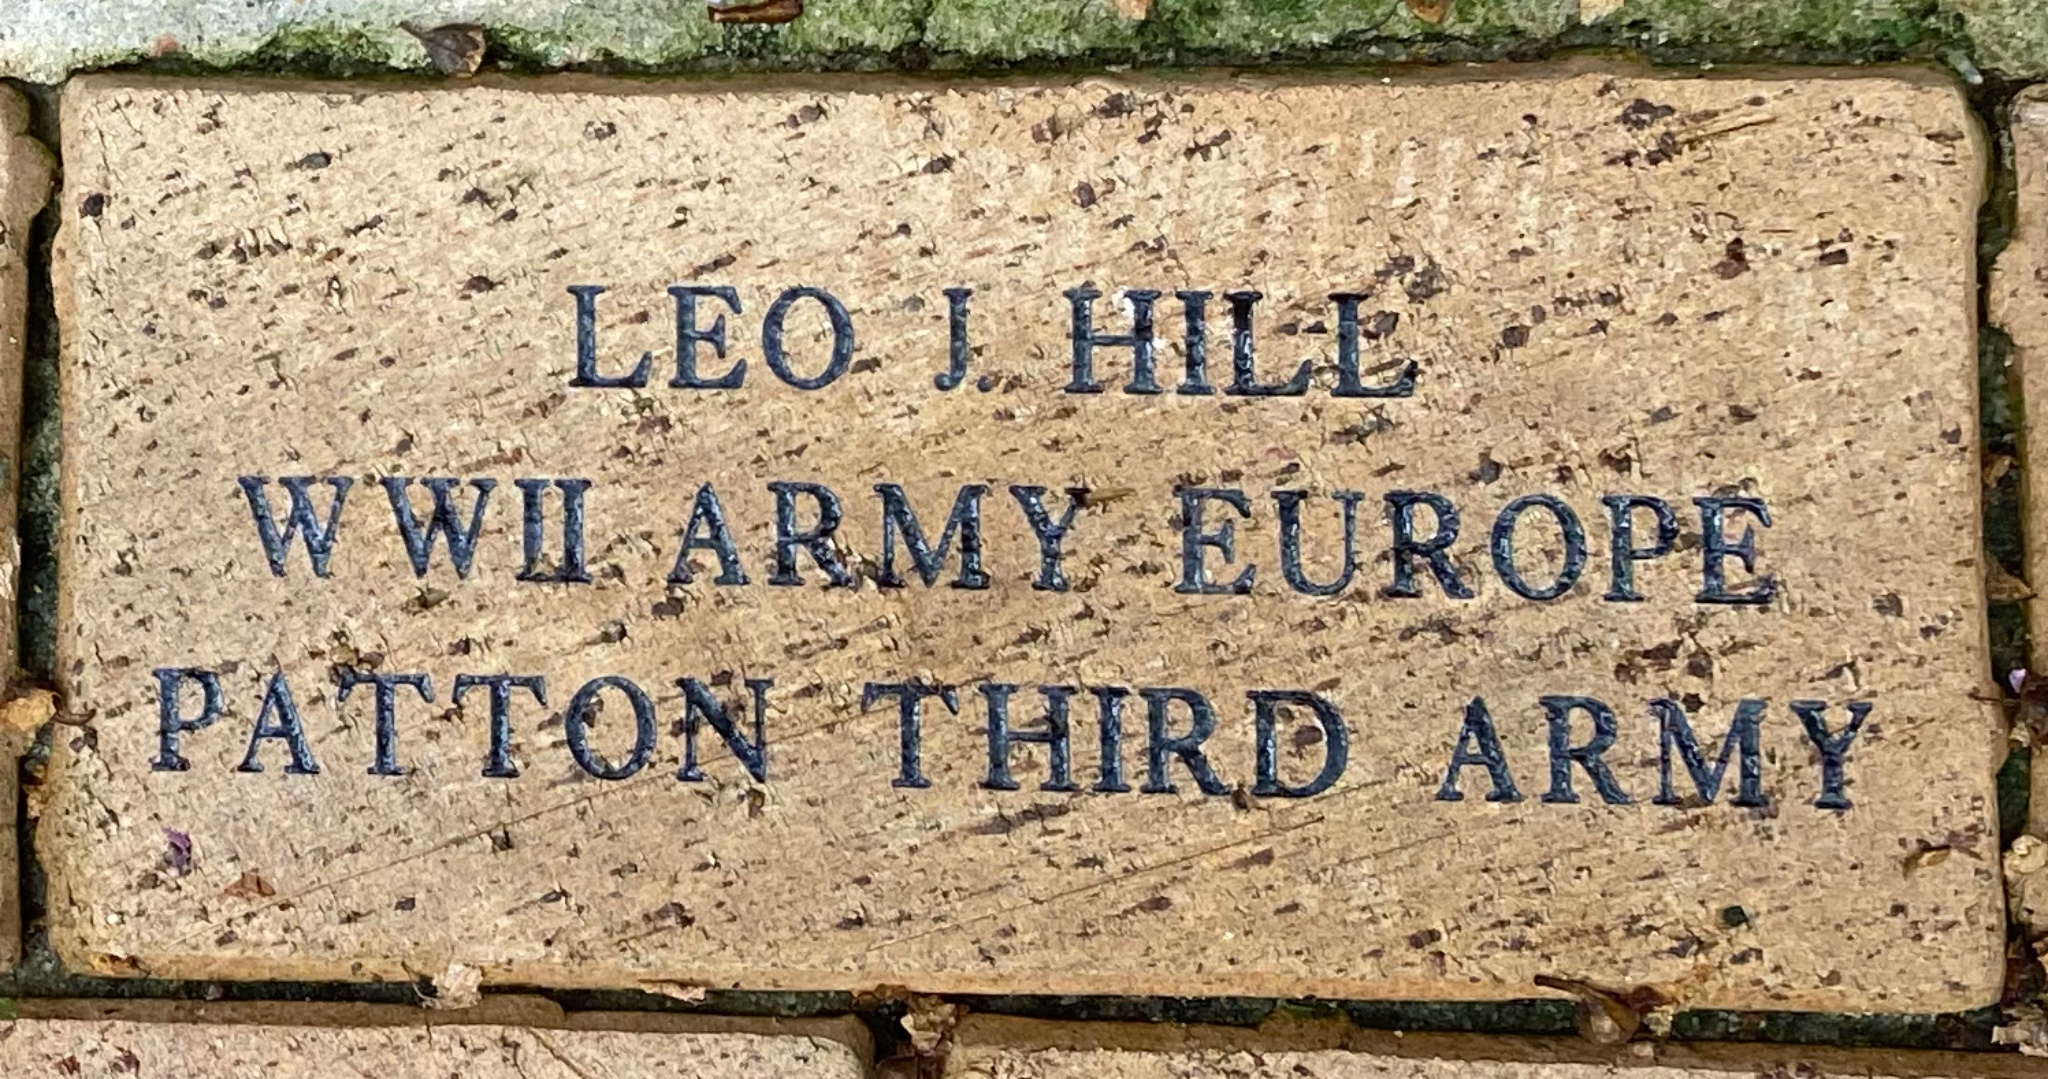 LEO J. HILL WWII ARMY EUROPE PATTON THIRD ARMY